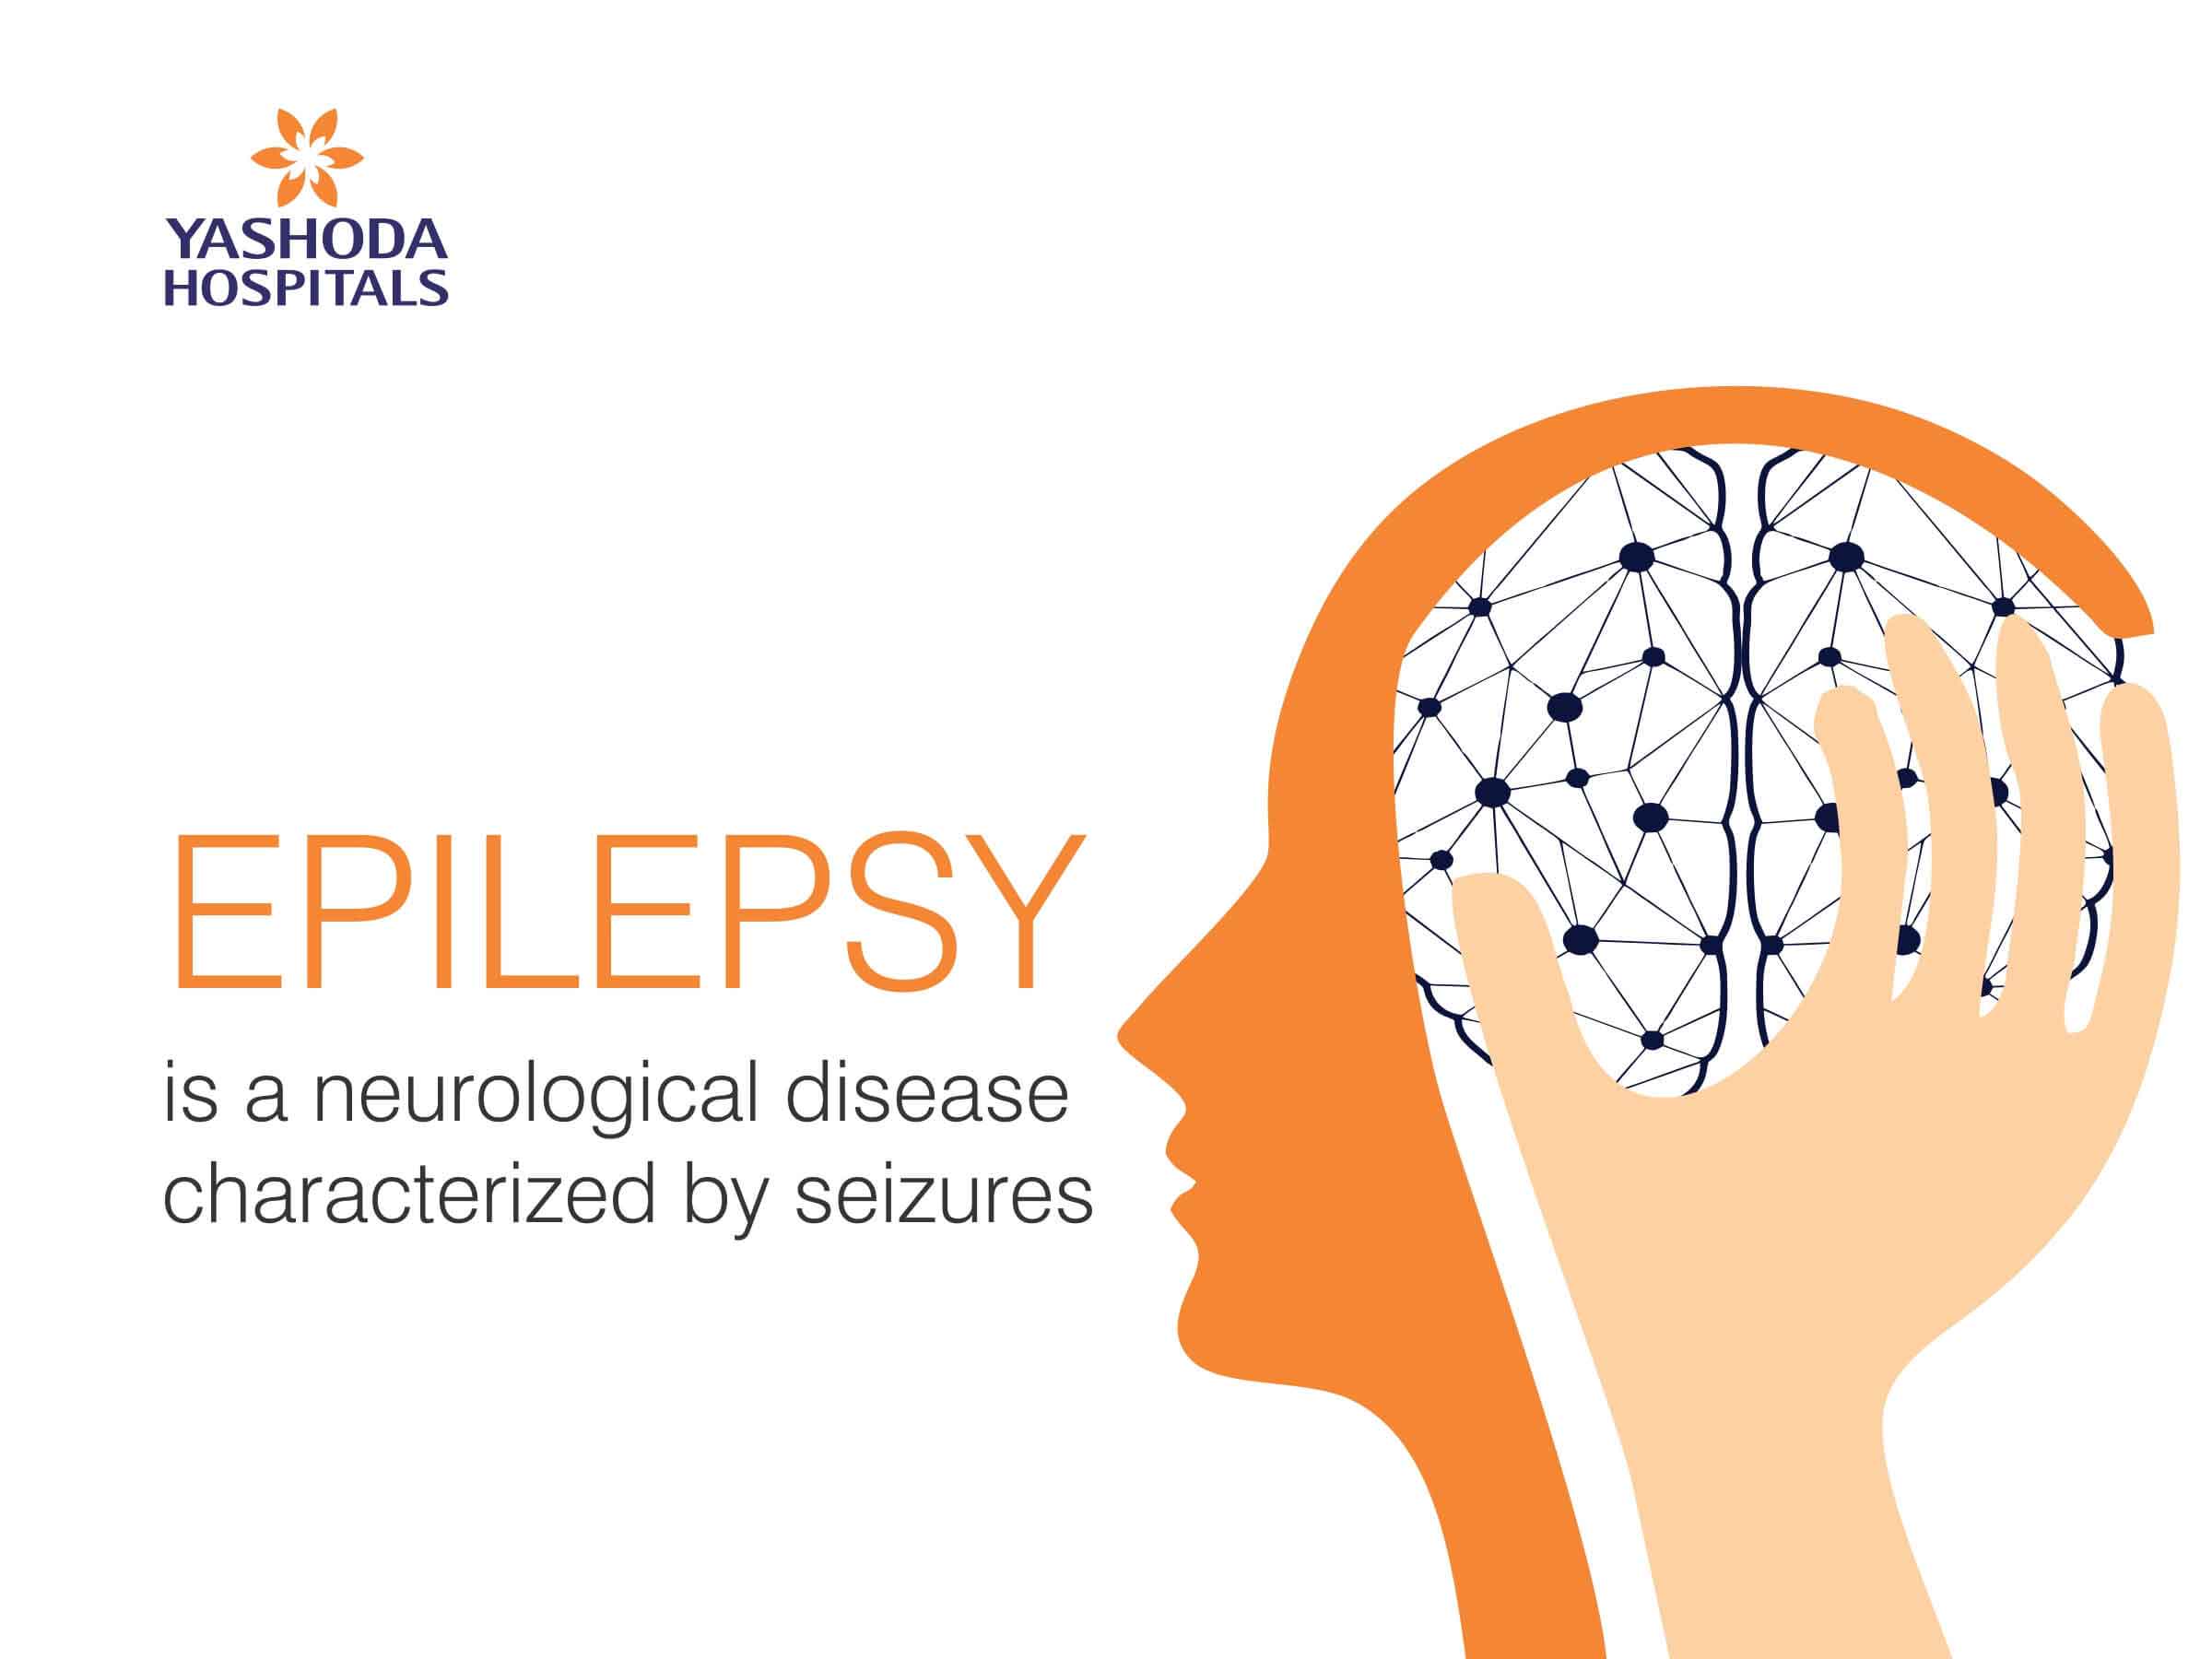 Epilepsy seizure or fits